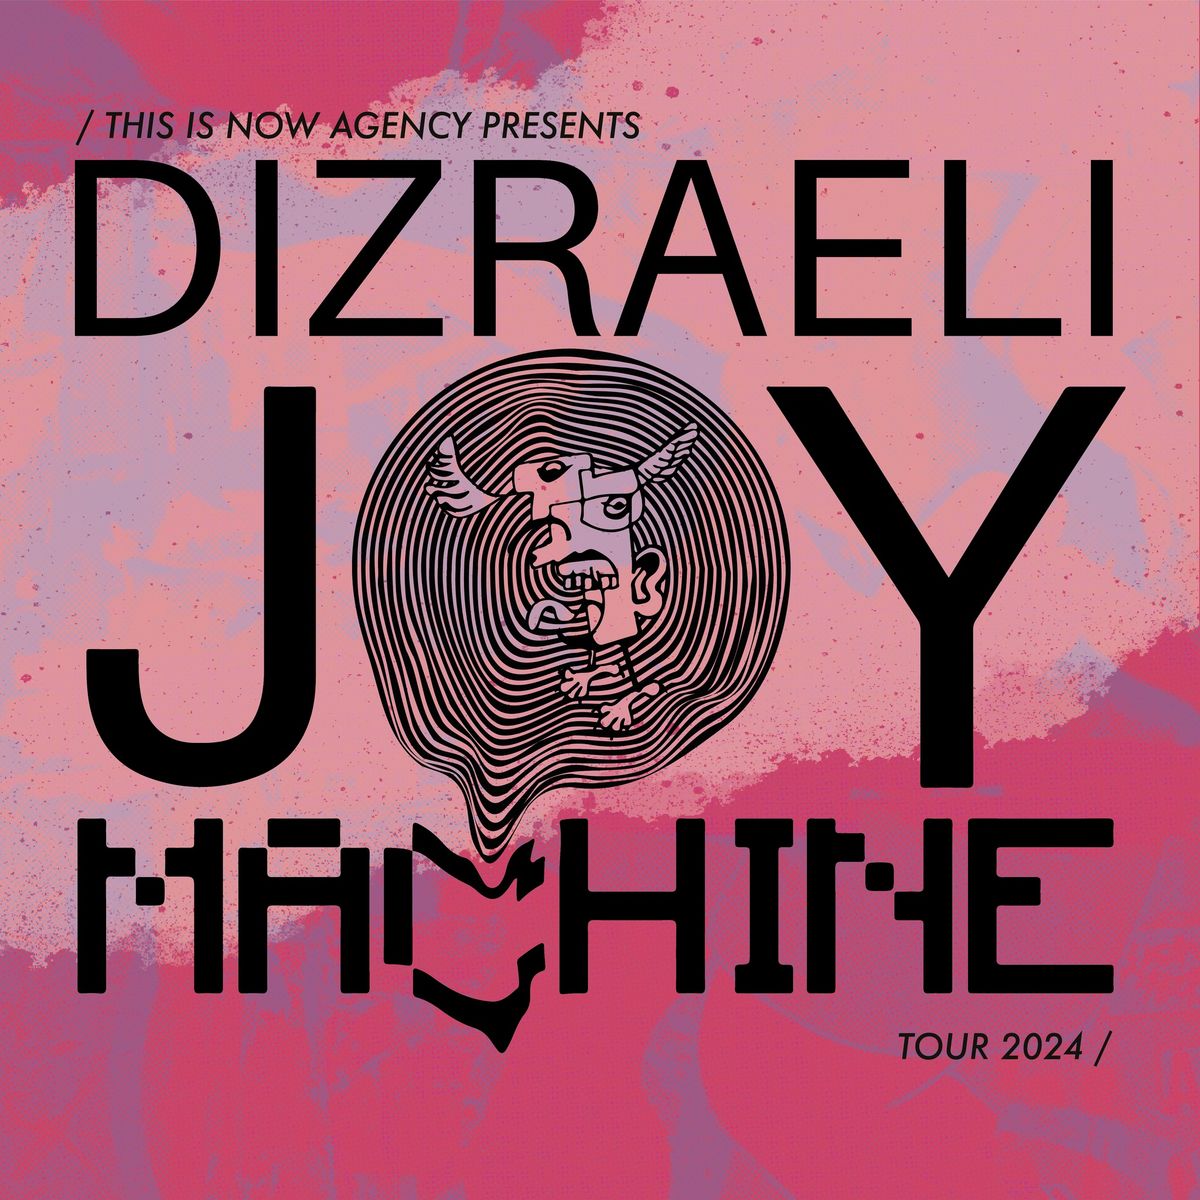 Dizraeli - Strange Brew, Bristol - JOY MACHINE TOUR 2024